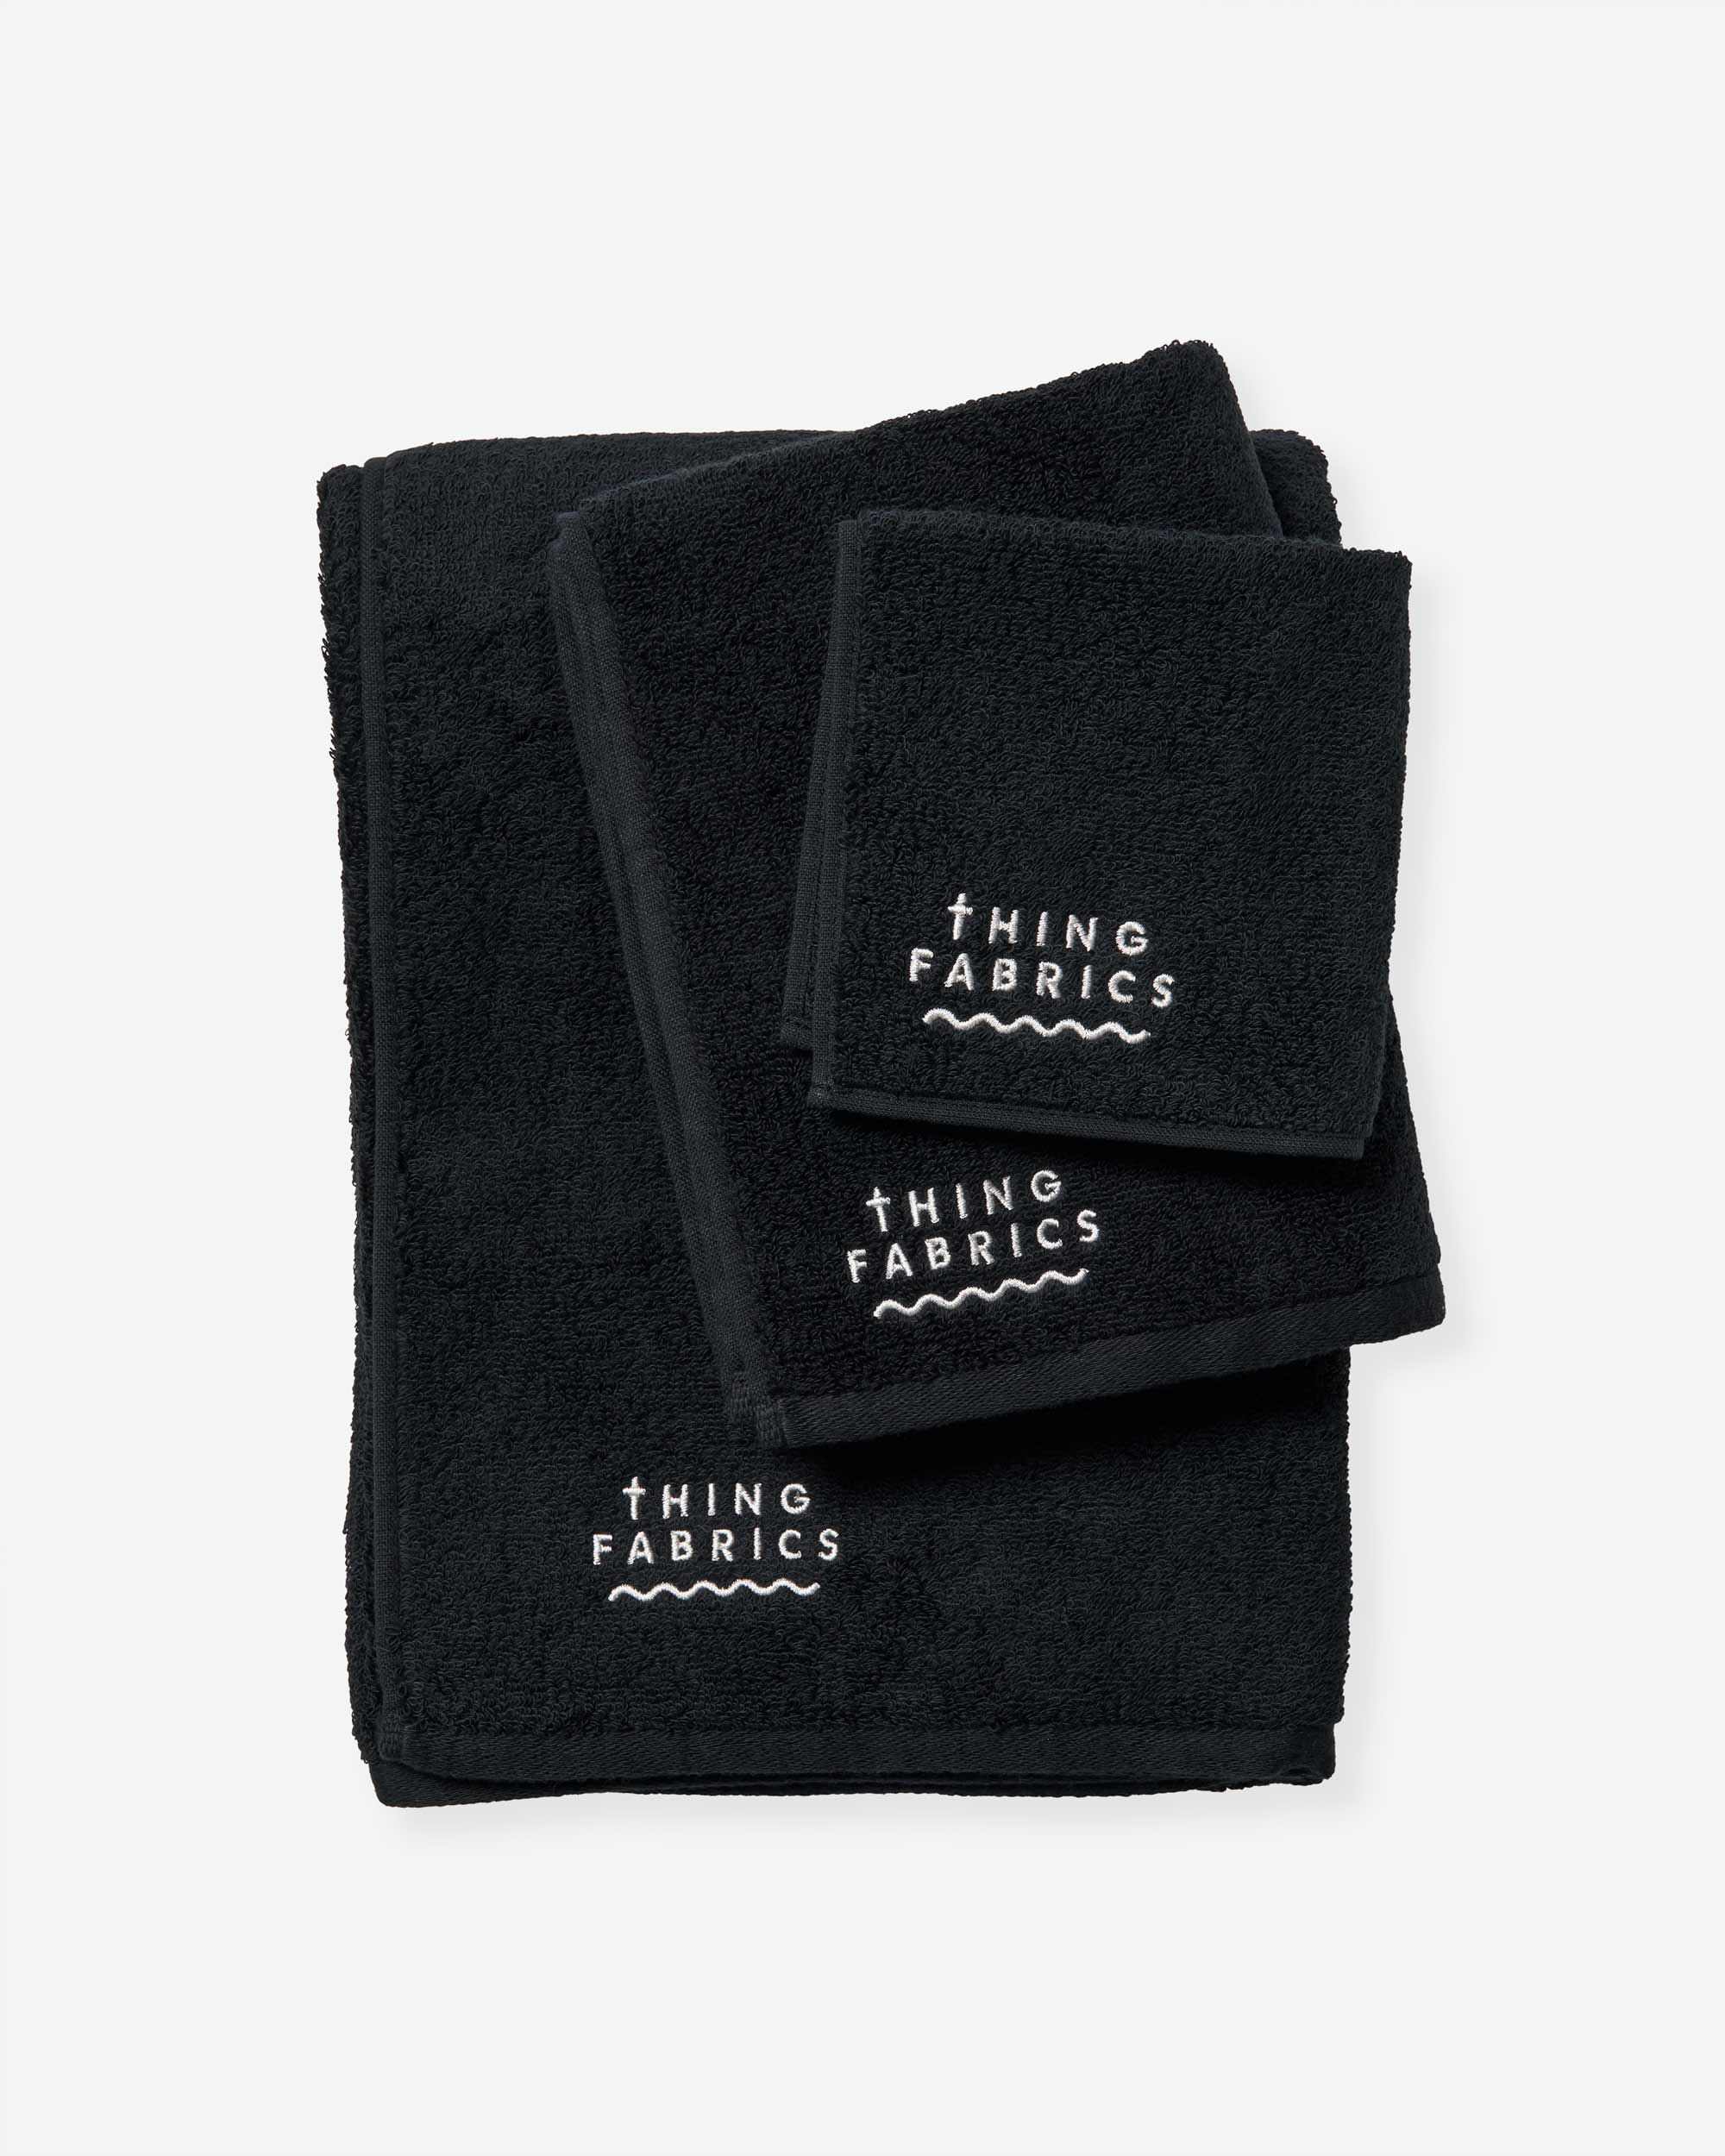 TIP TOP 365 Towel Gift Box - Black